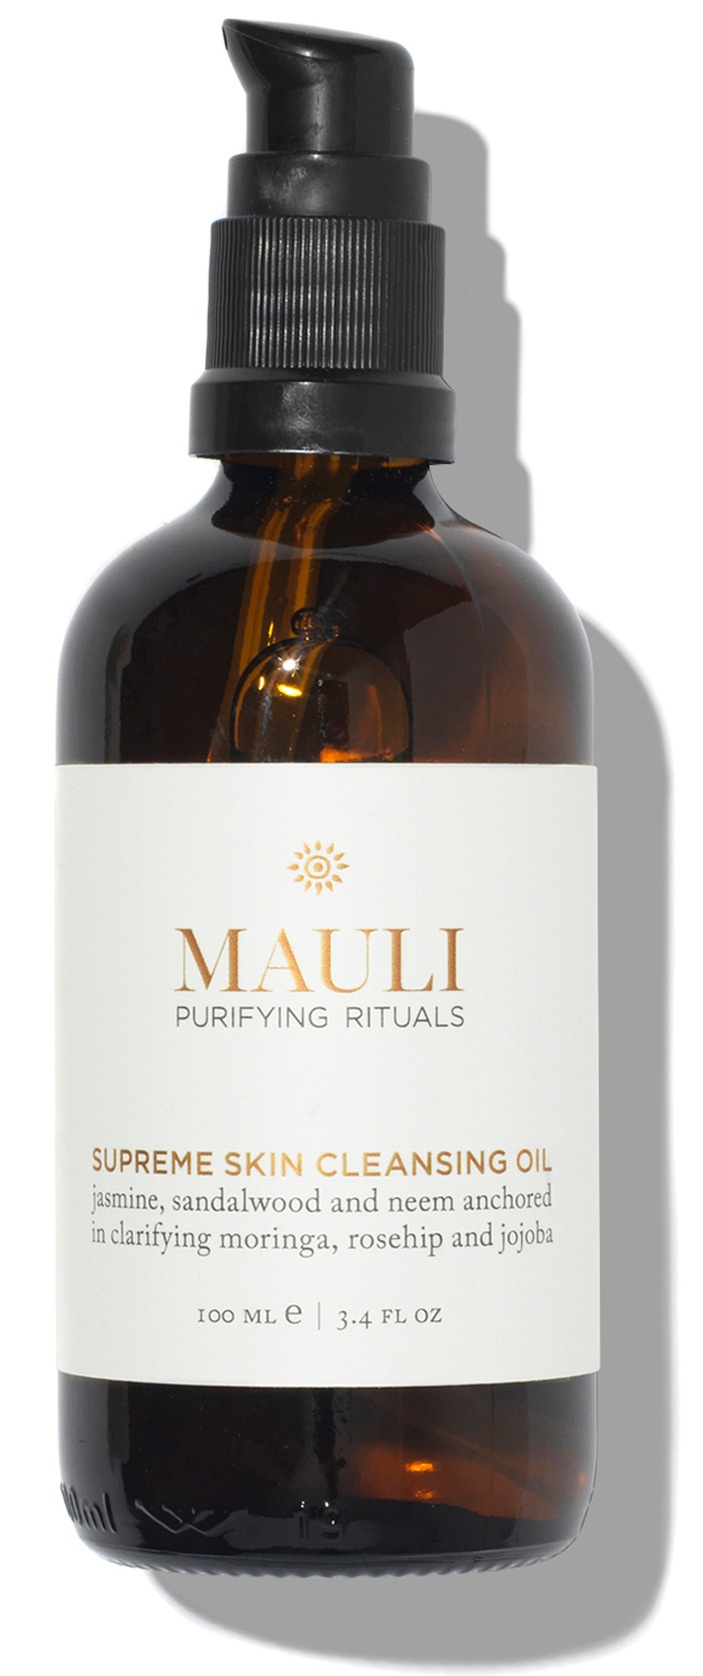 Mauli Supreme Skin Cleansing Oil